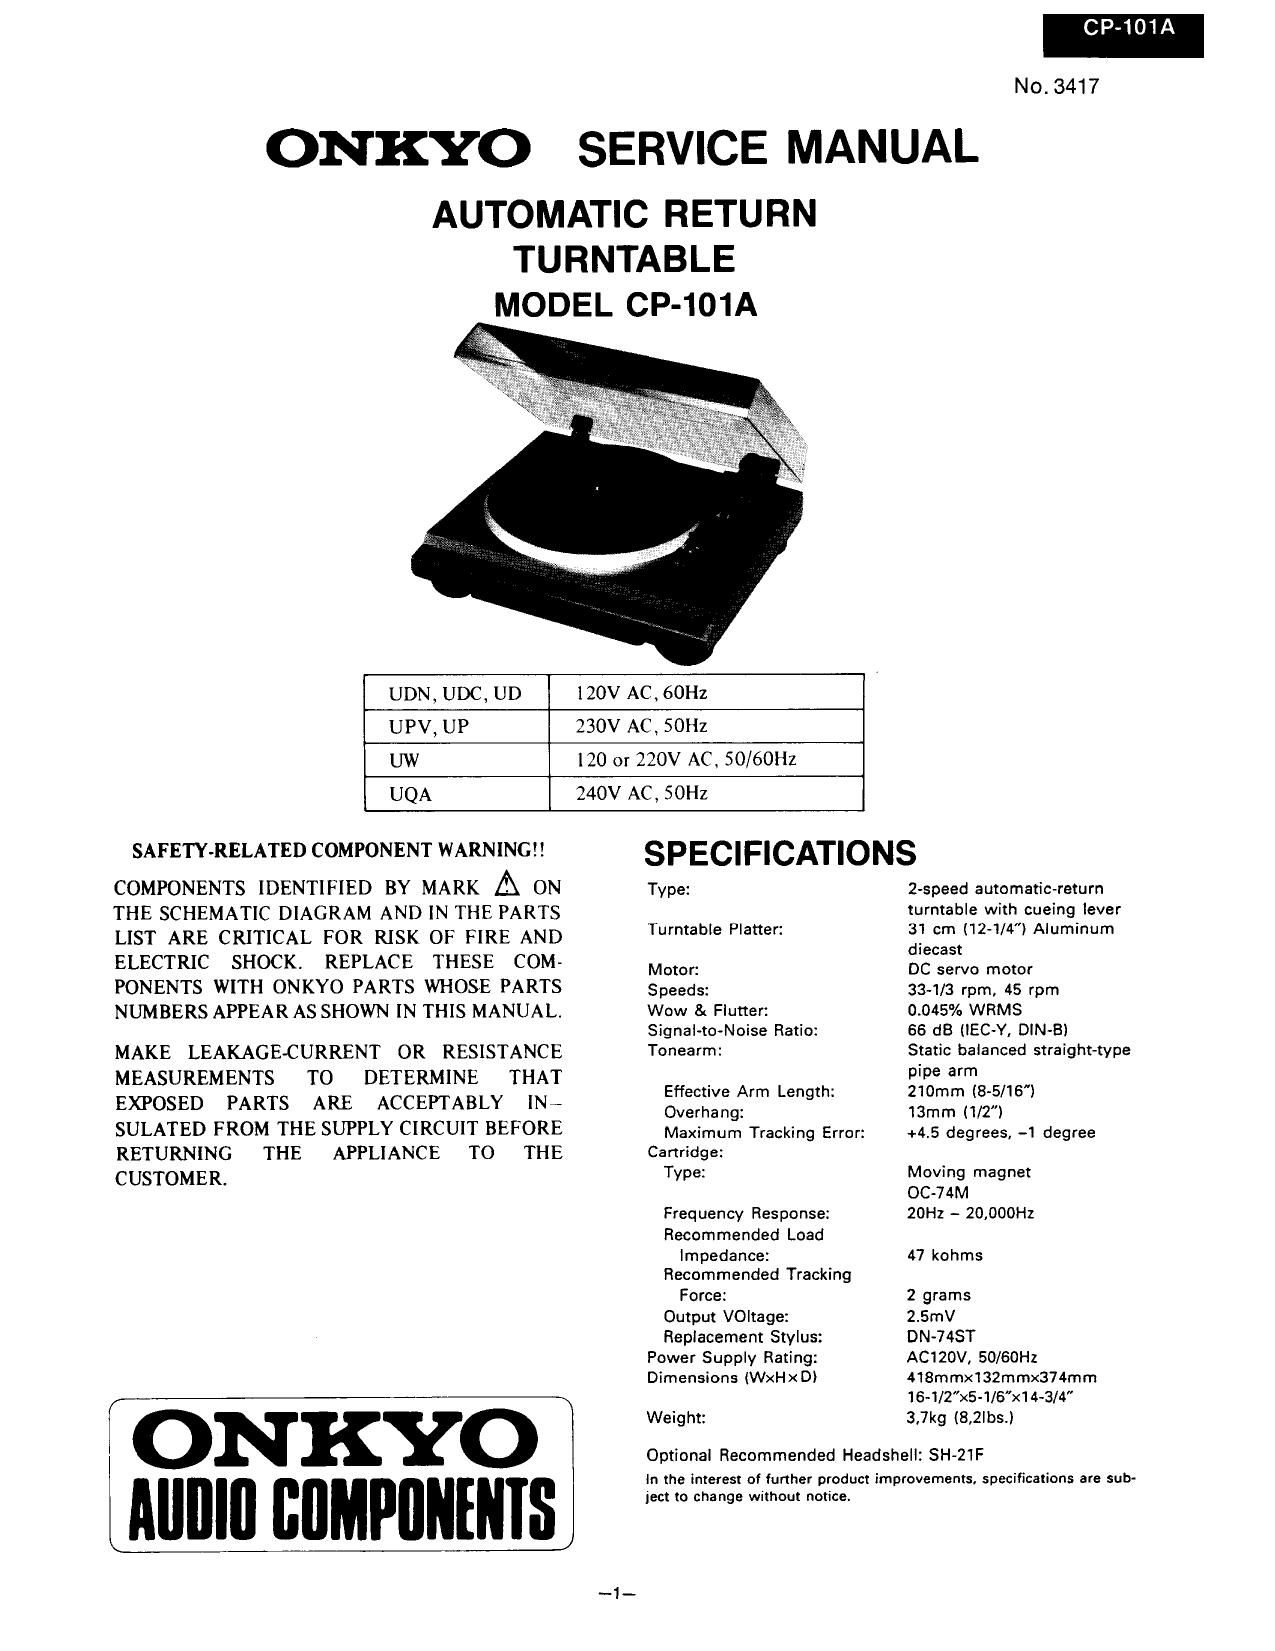 Onkyo CP 101 A Service Manual